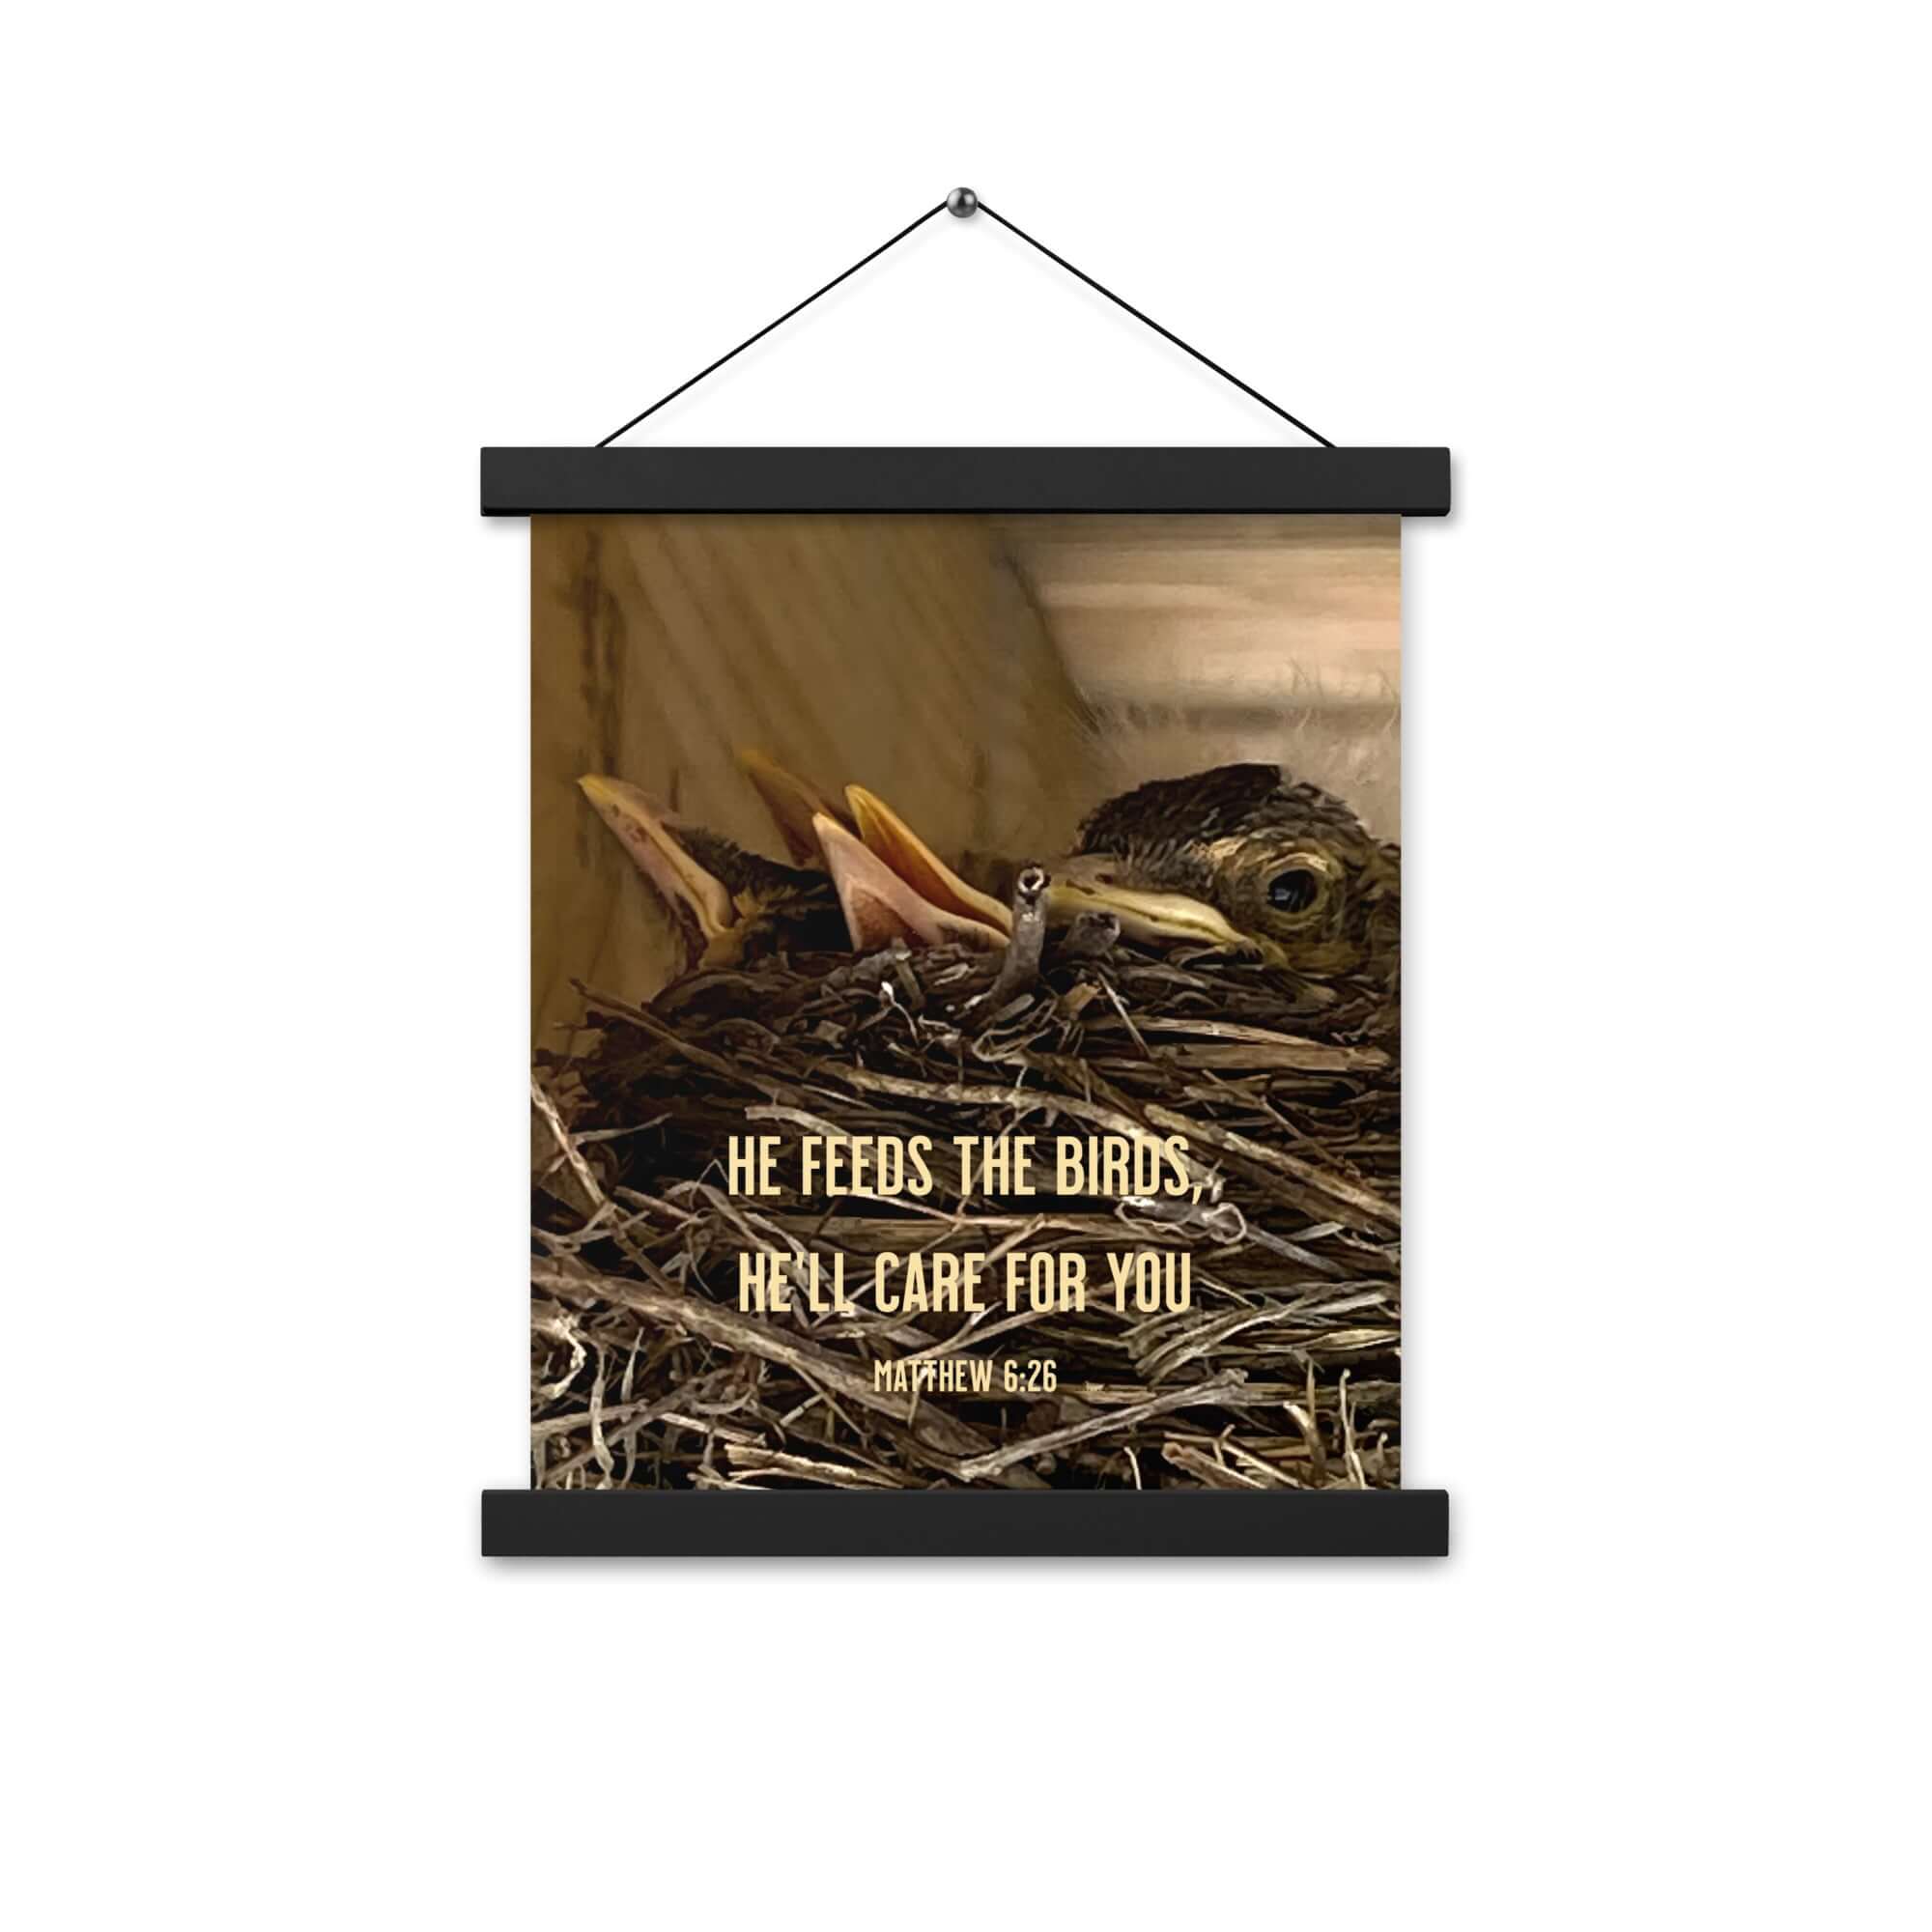 Matt 6:26, Baby Robins, He'll Care for You Hanger Poster